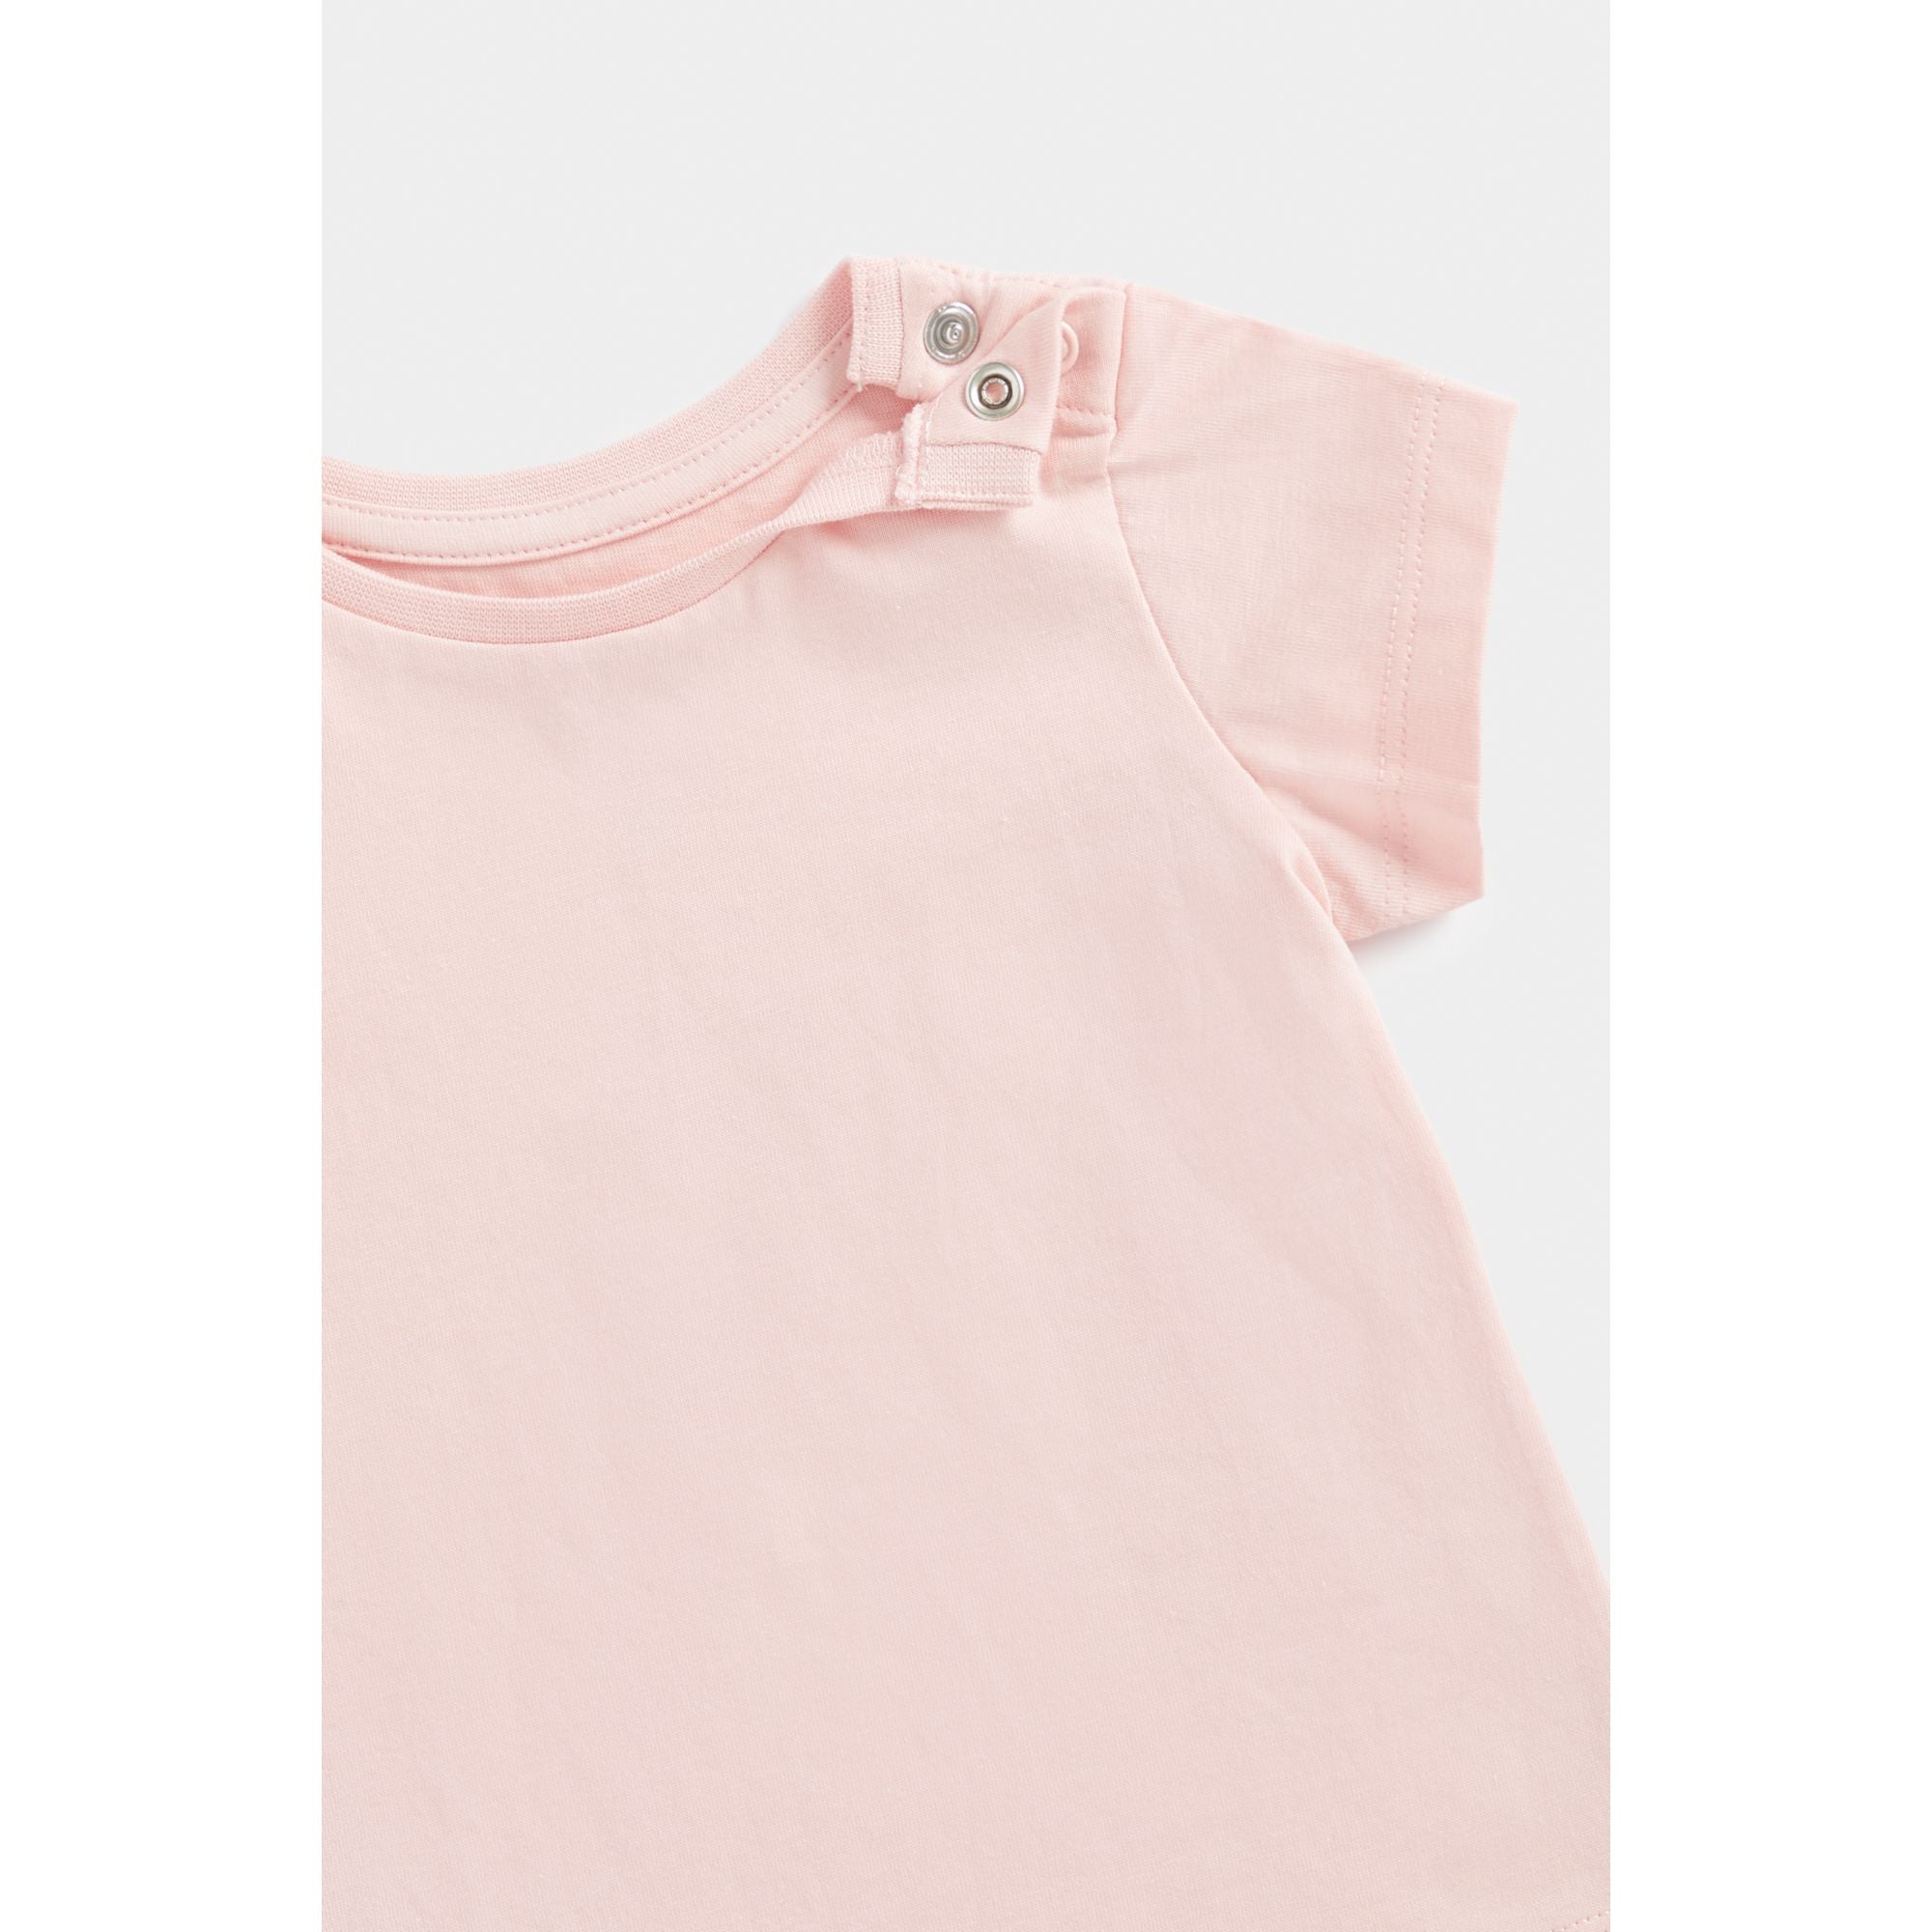 Mothercare Pink T-Shirt